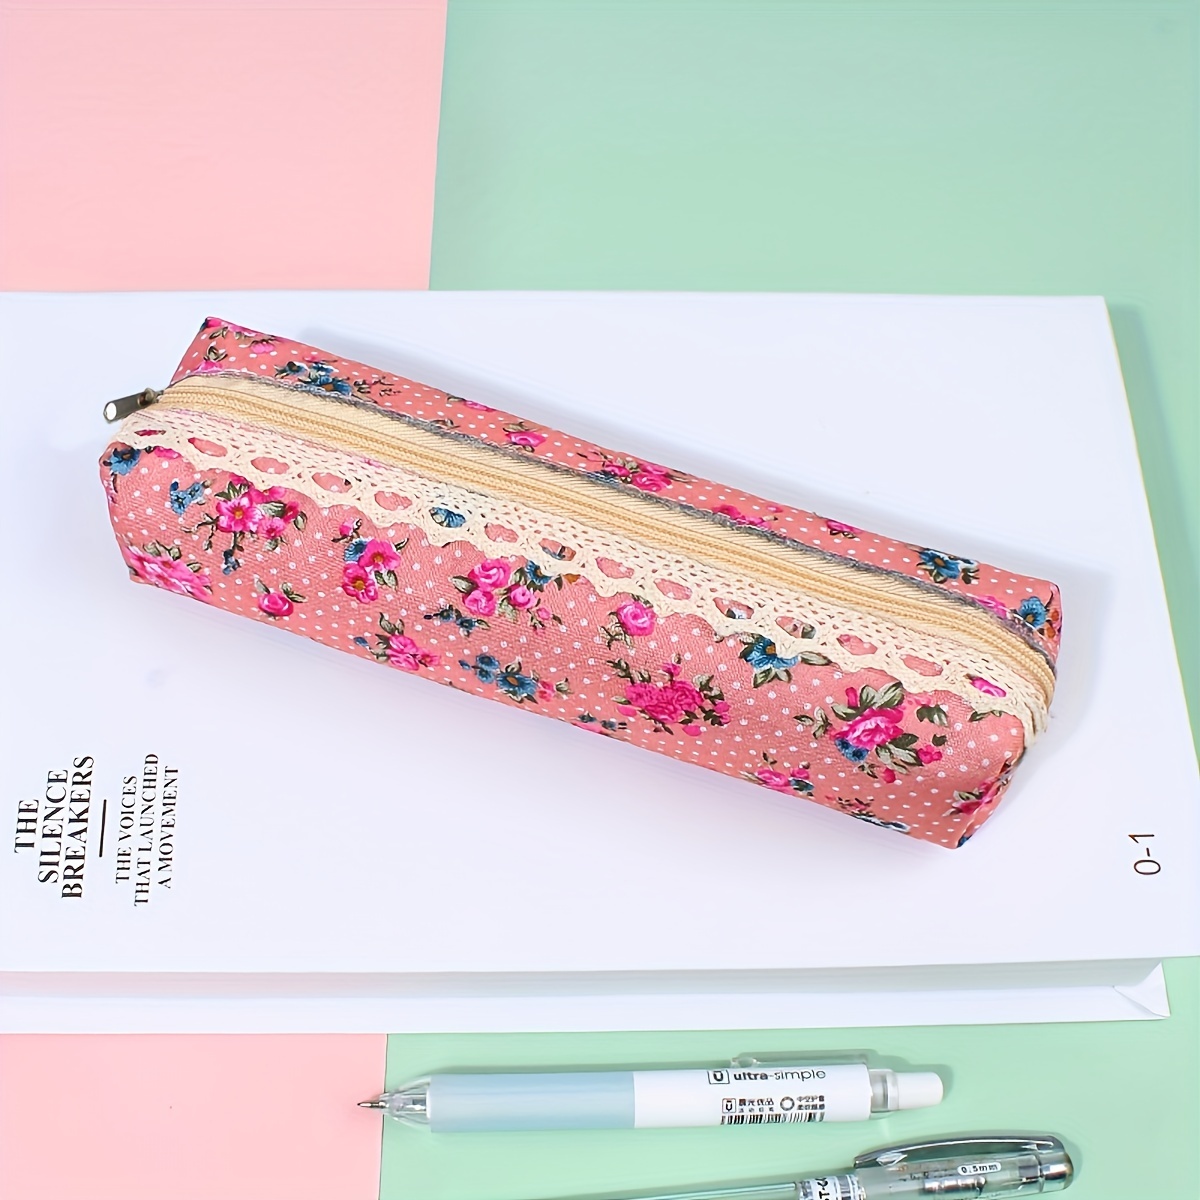 1pc Portable Pink Pencil Case